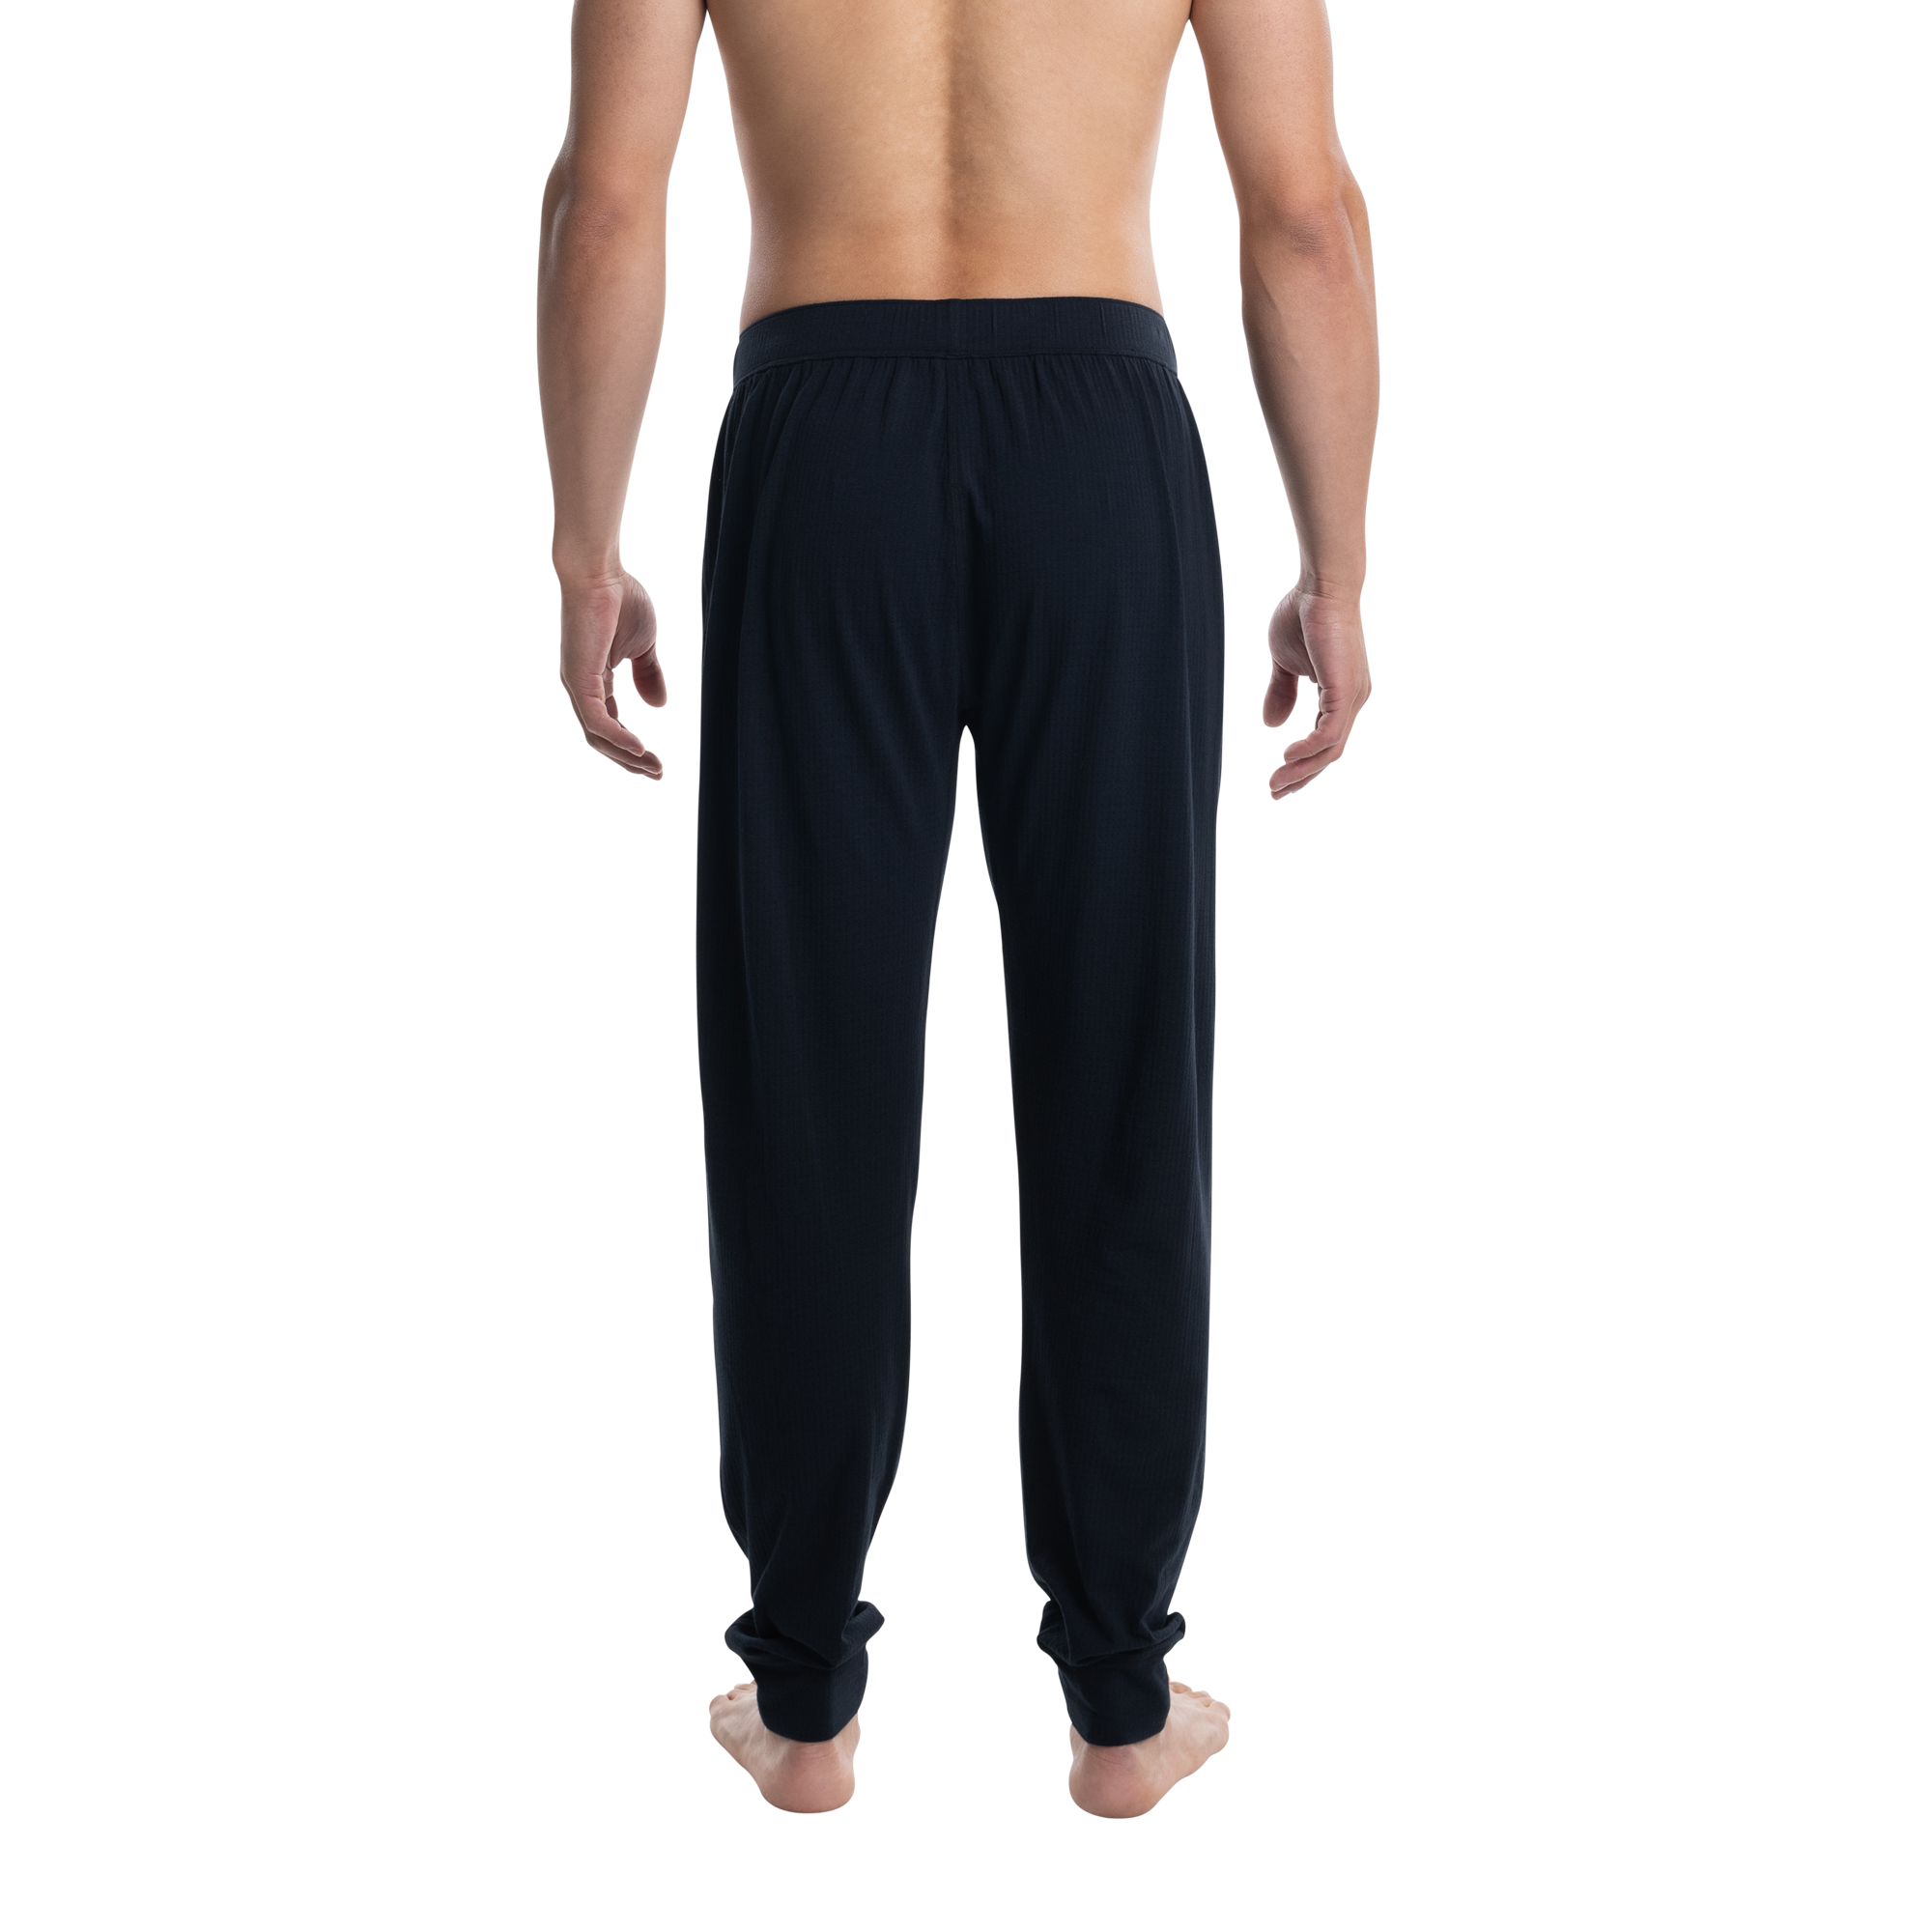 Back - Model wearing Droptemp Cooling Sleep Pant Fly in Black